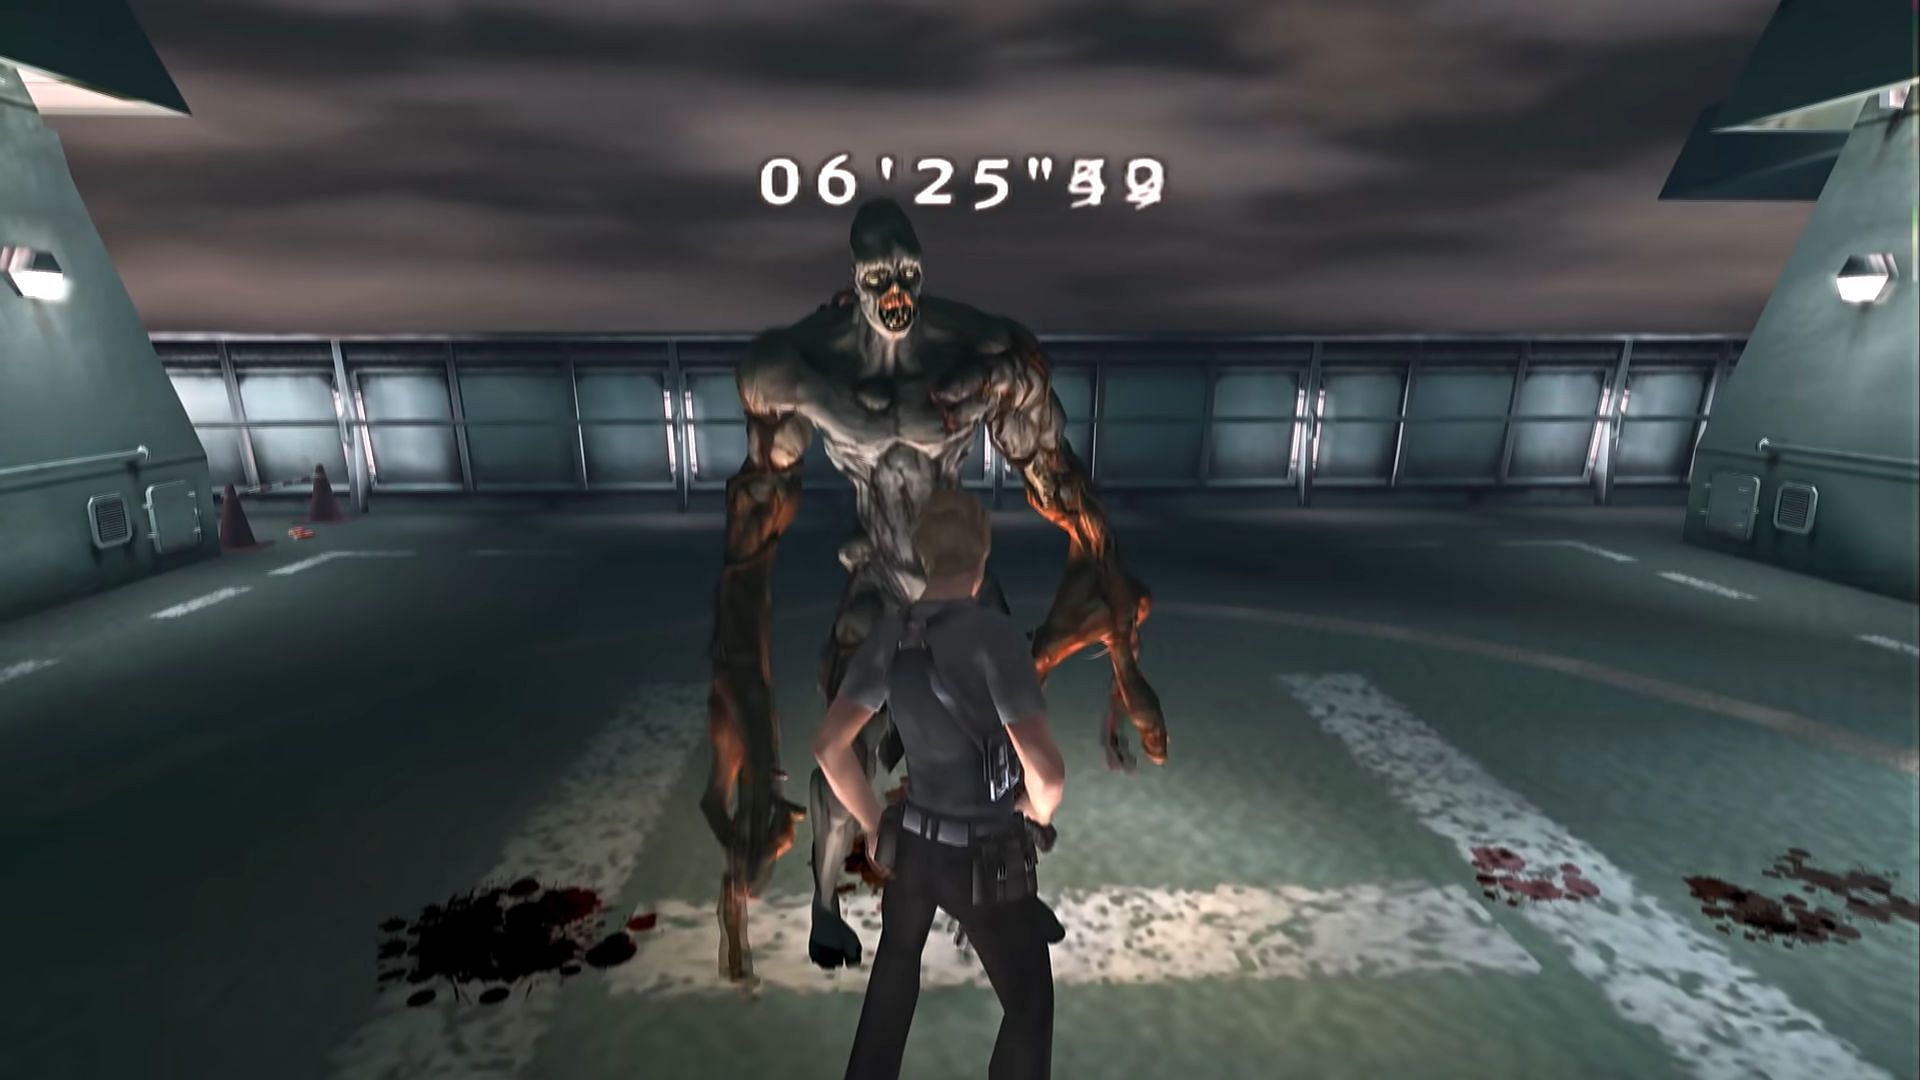 Resident Evil Dead Aim was underrated (Image via Capcom)